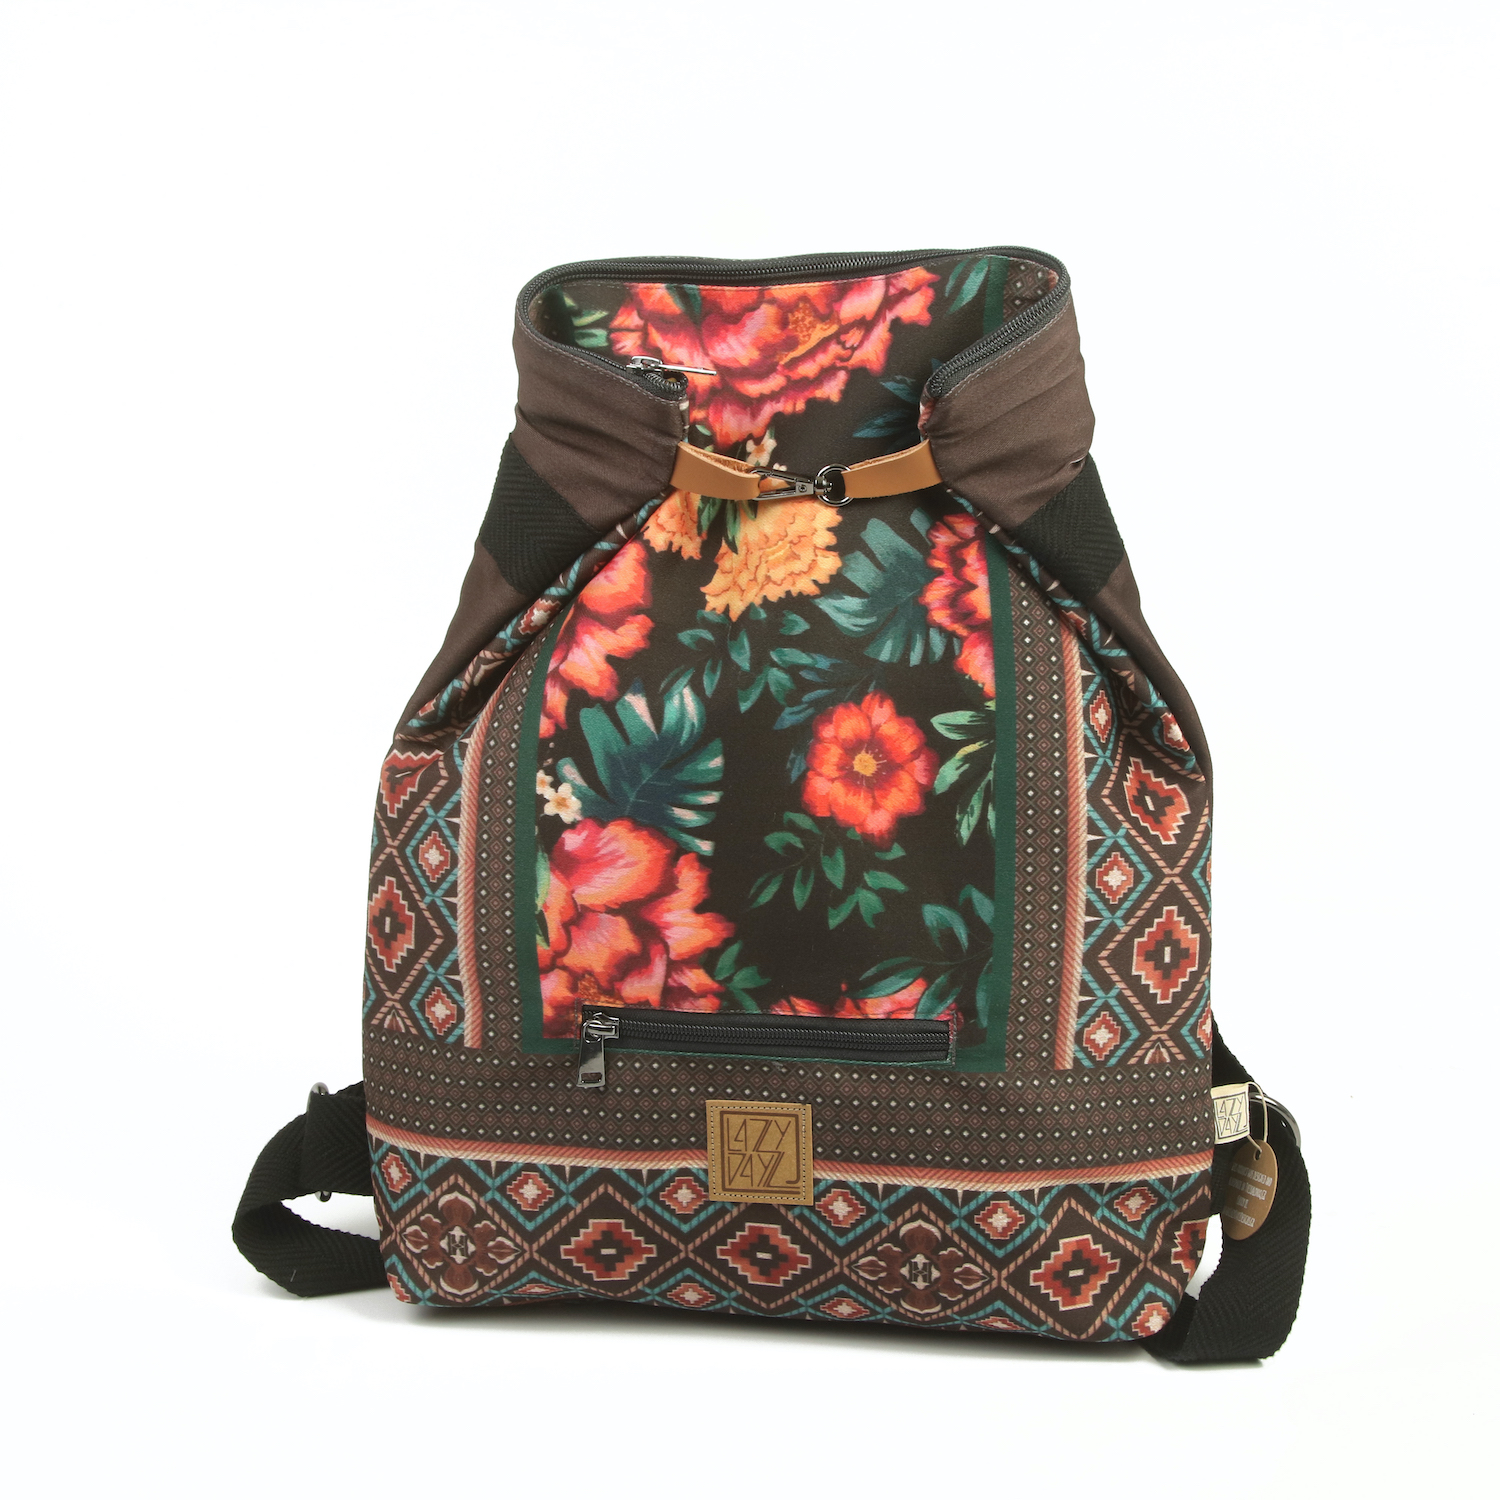 LazyDayz Designs Backpack γυναικείος σάκος πλάτης χειροποίητος bb0506d